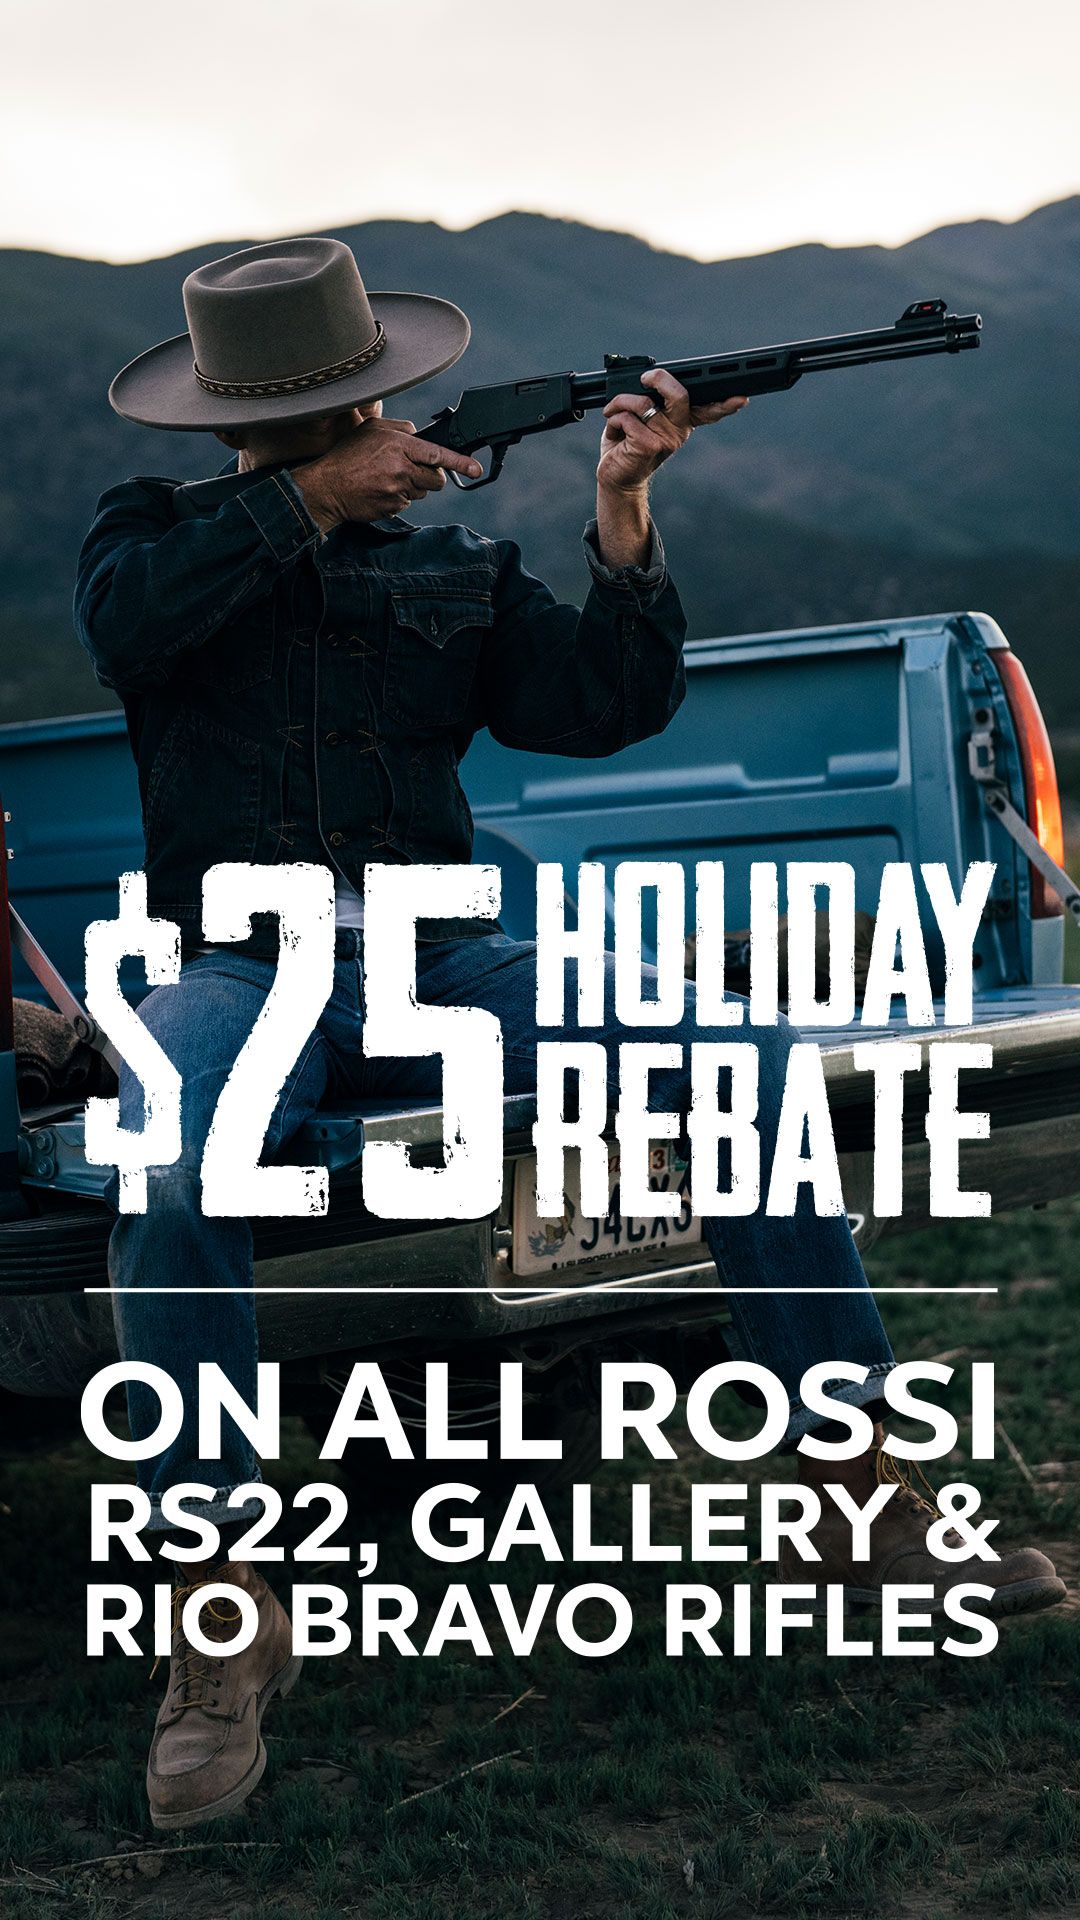 $25 Rossi Holiday Rebate